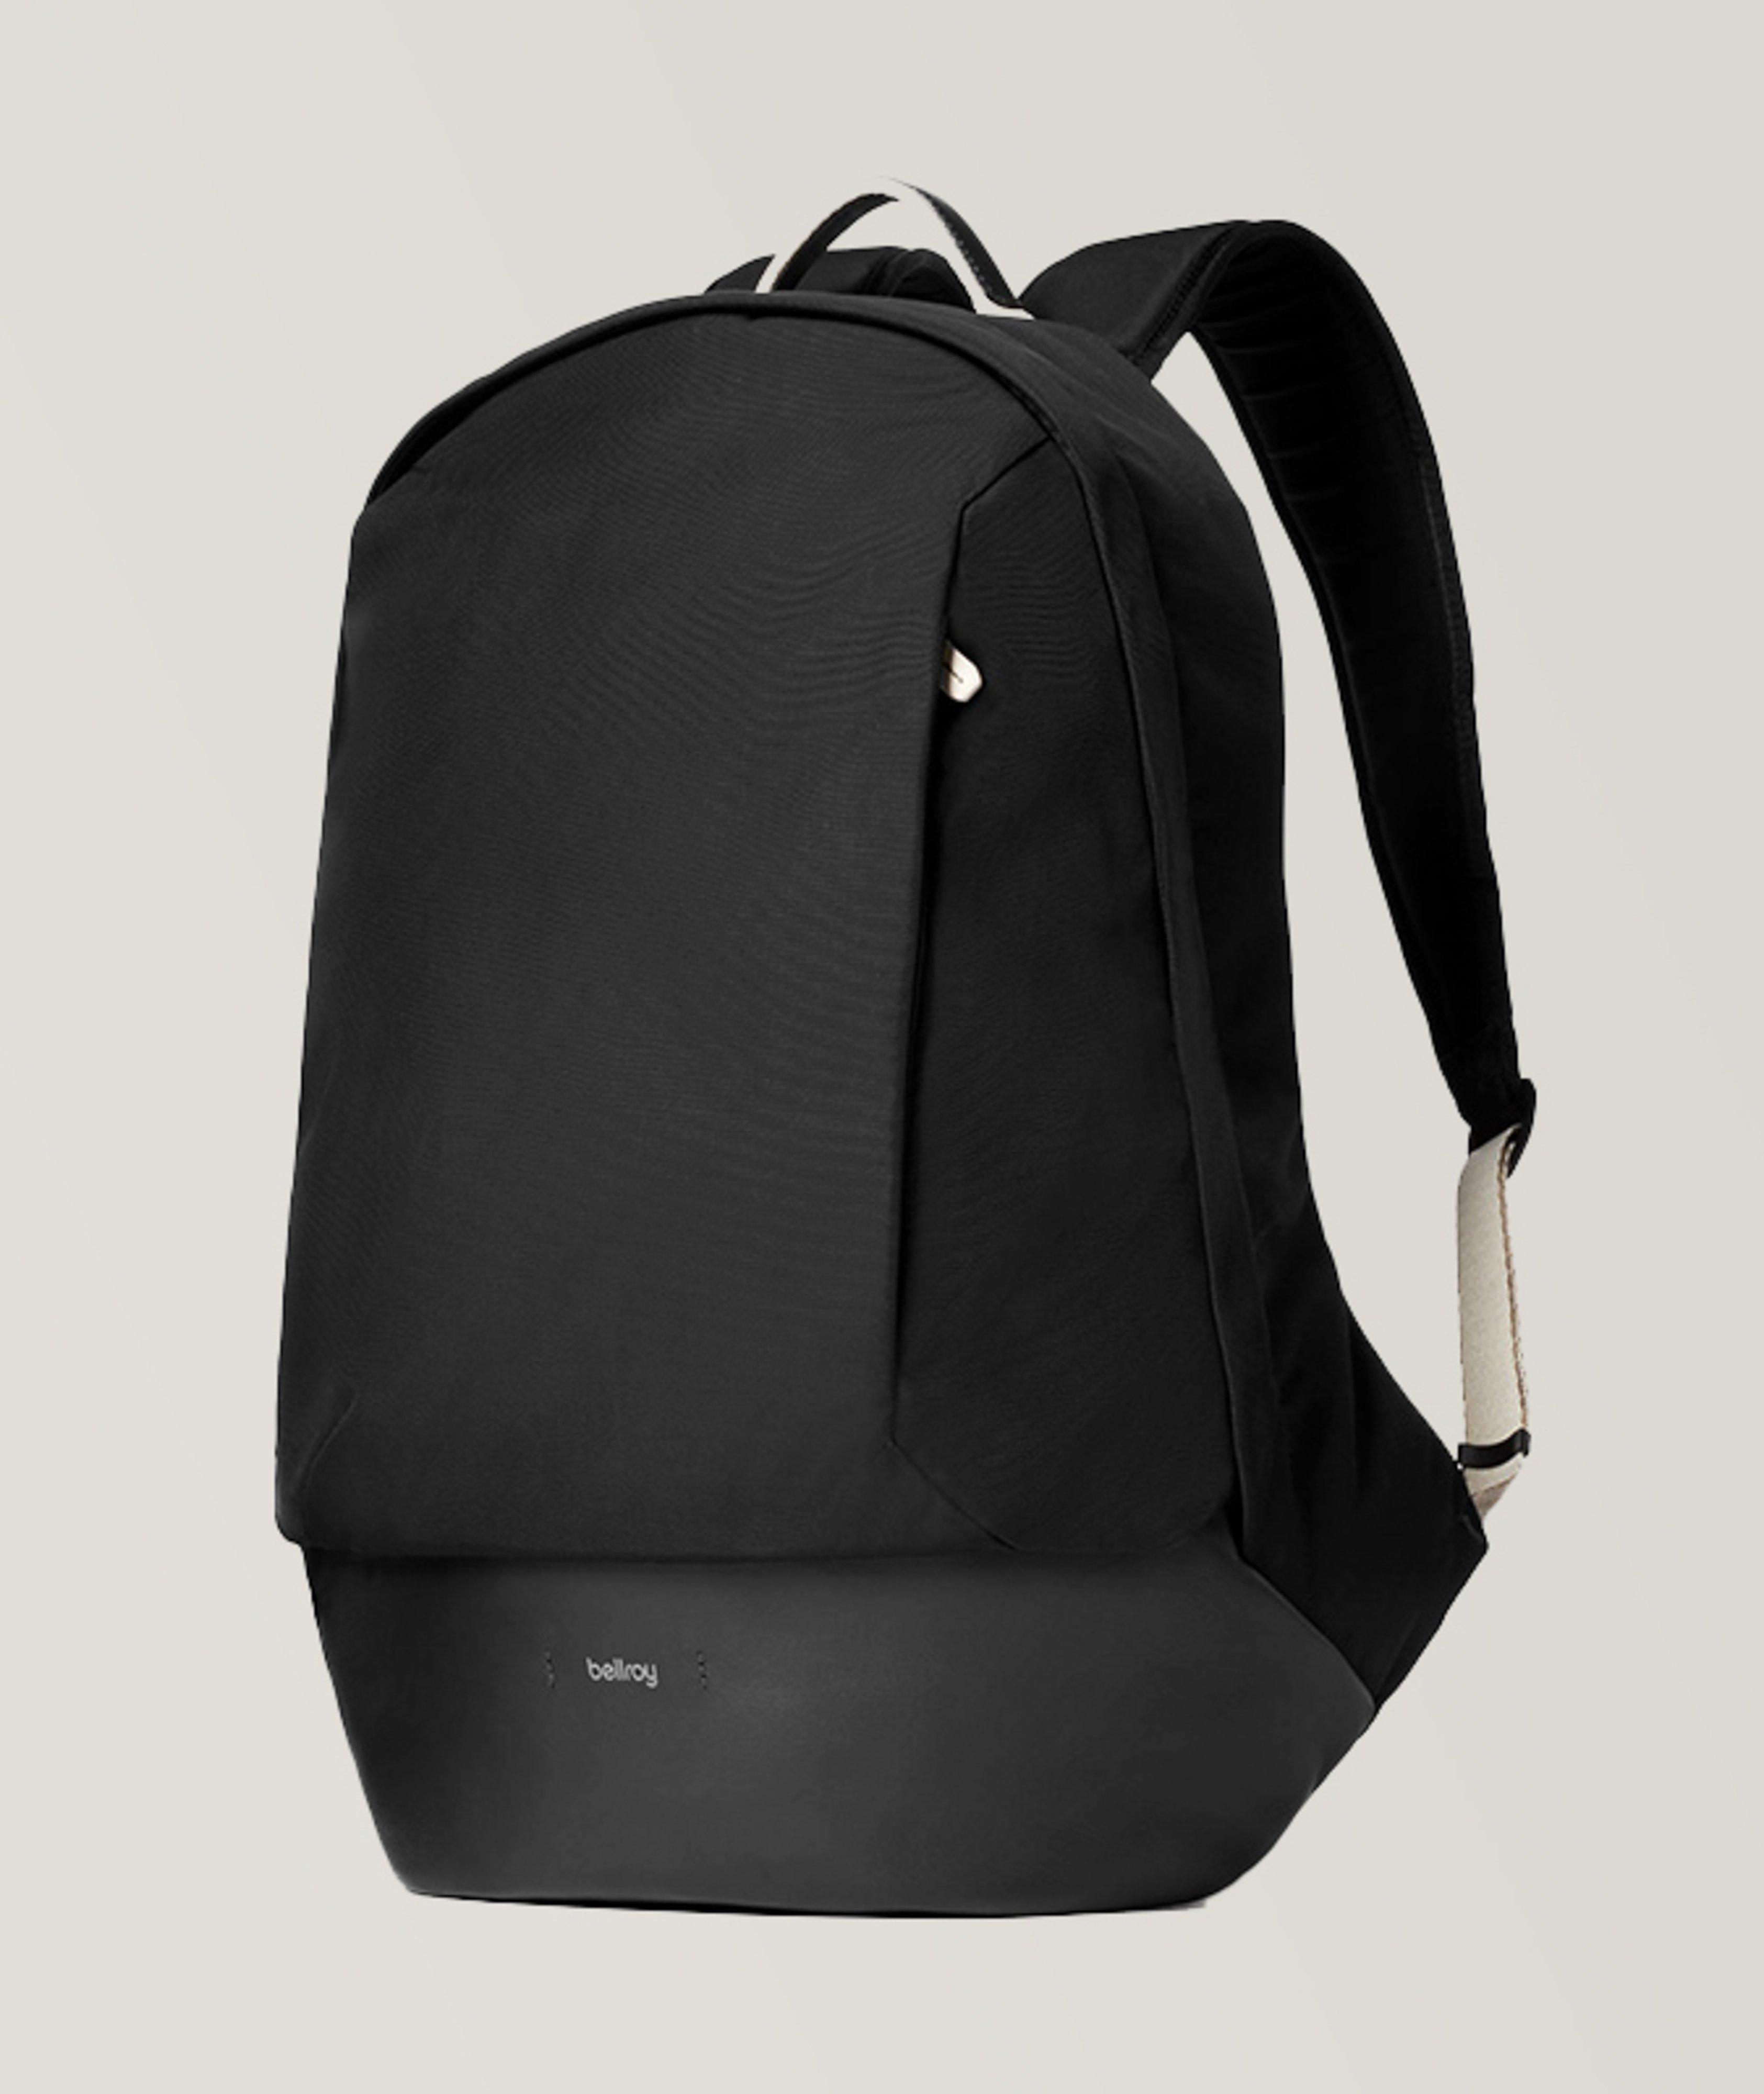 Bellroy Classic Backpack Premium